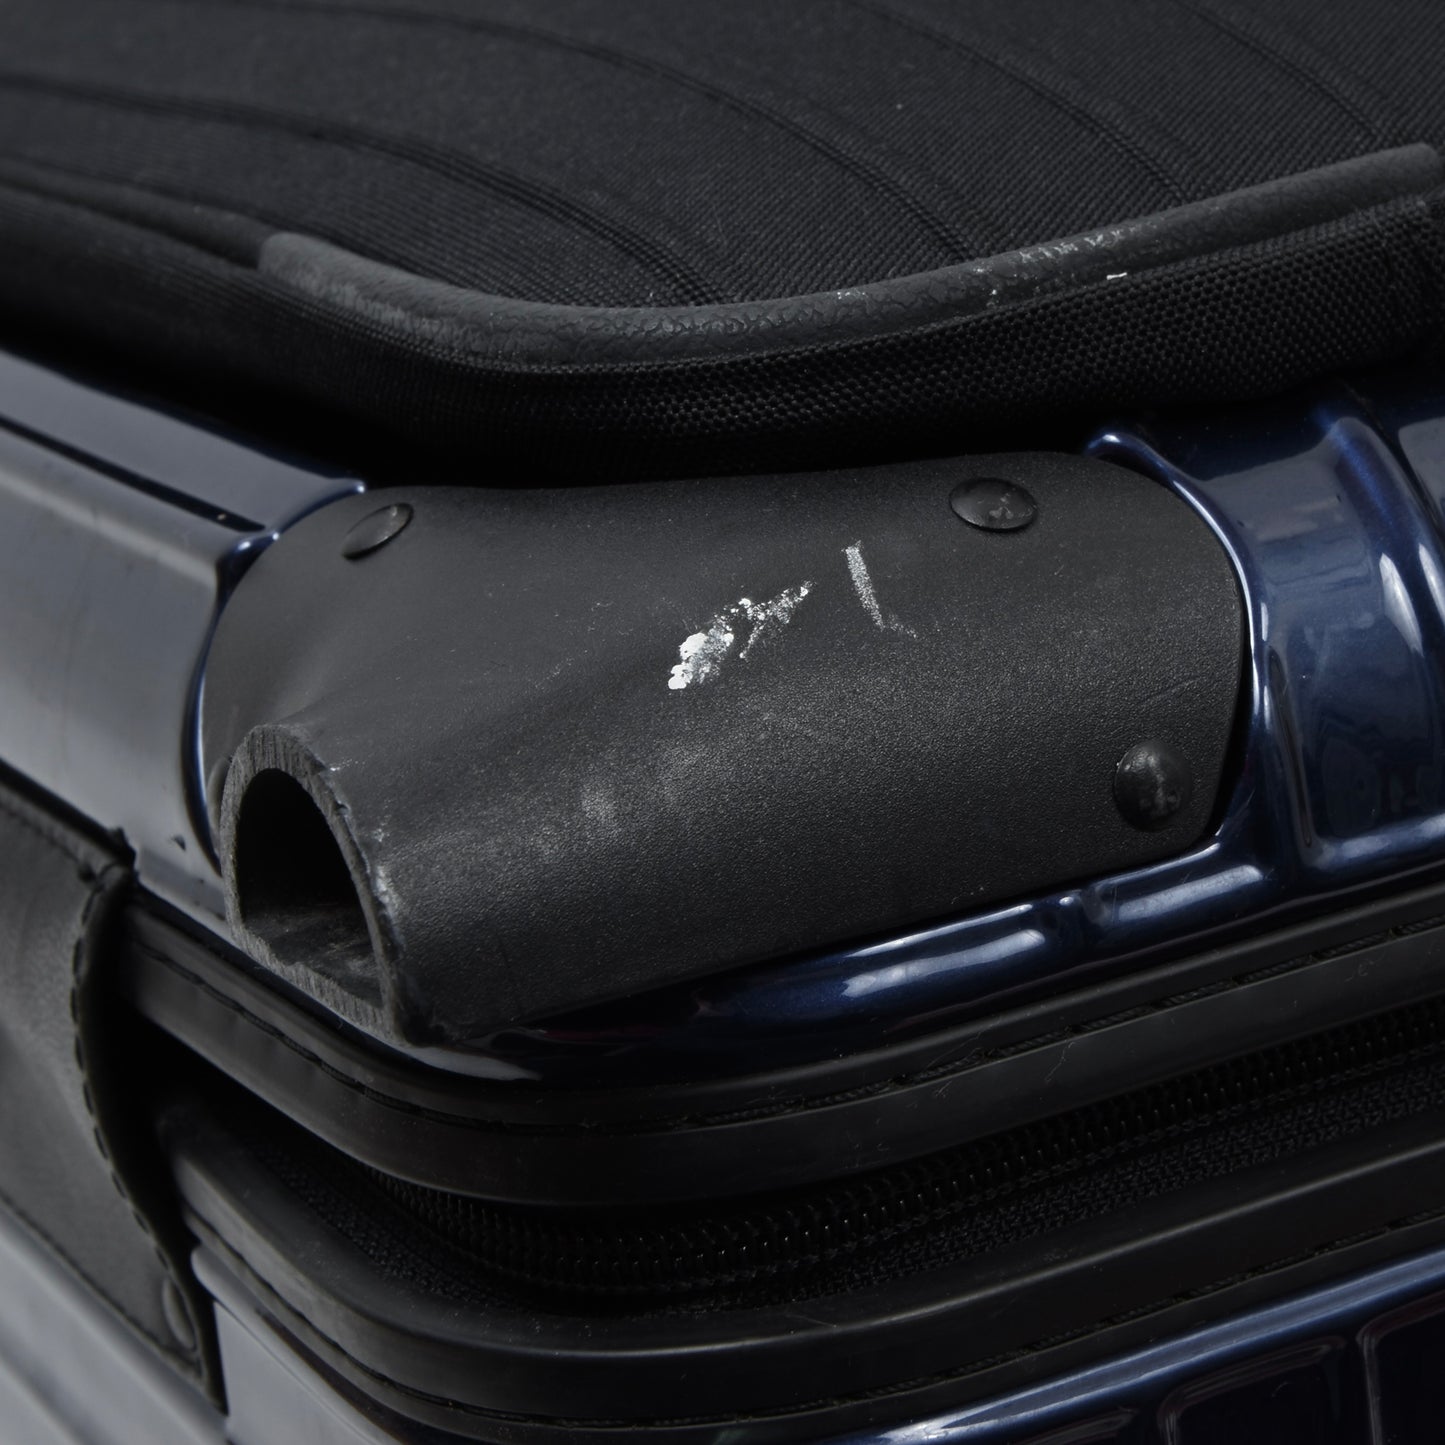 Rimowa For  Lufthansa Cabin Suitcase Width ca. 40cm - Blue/Black